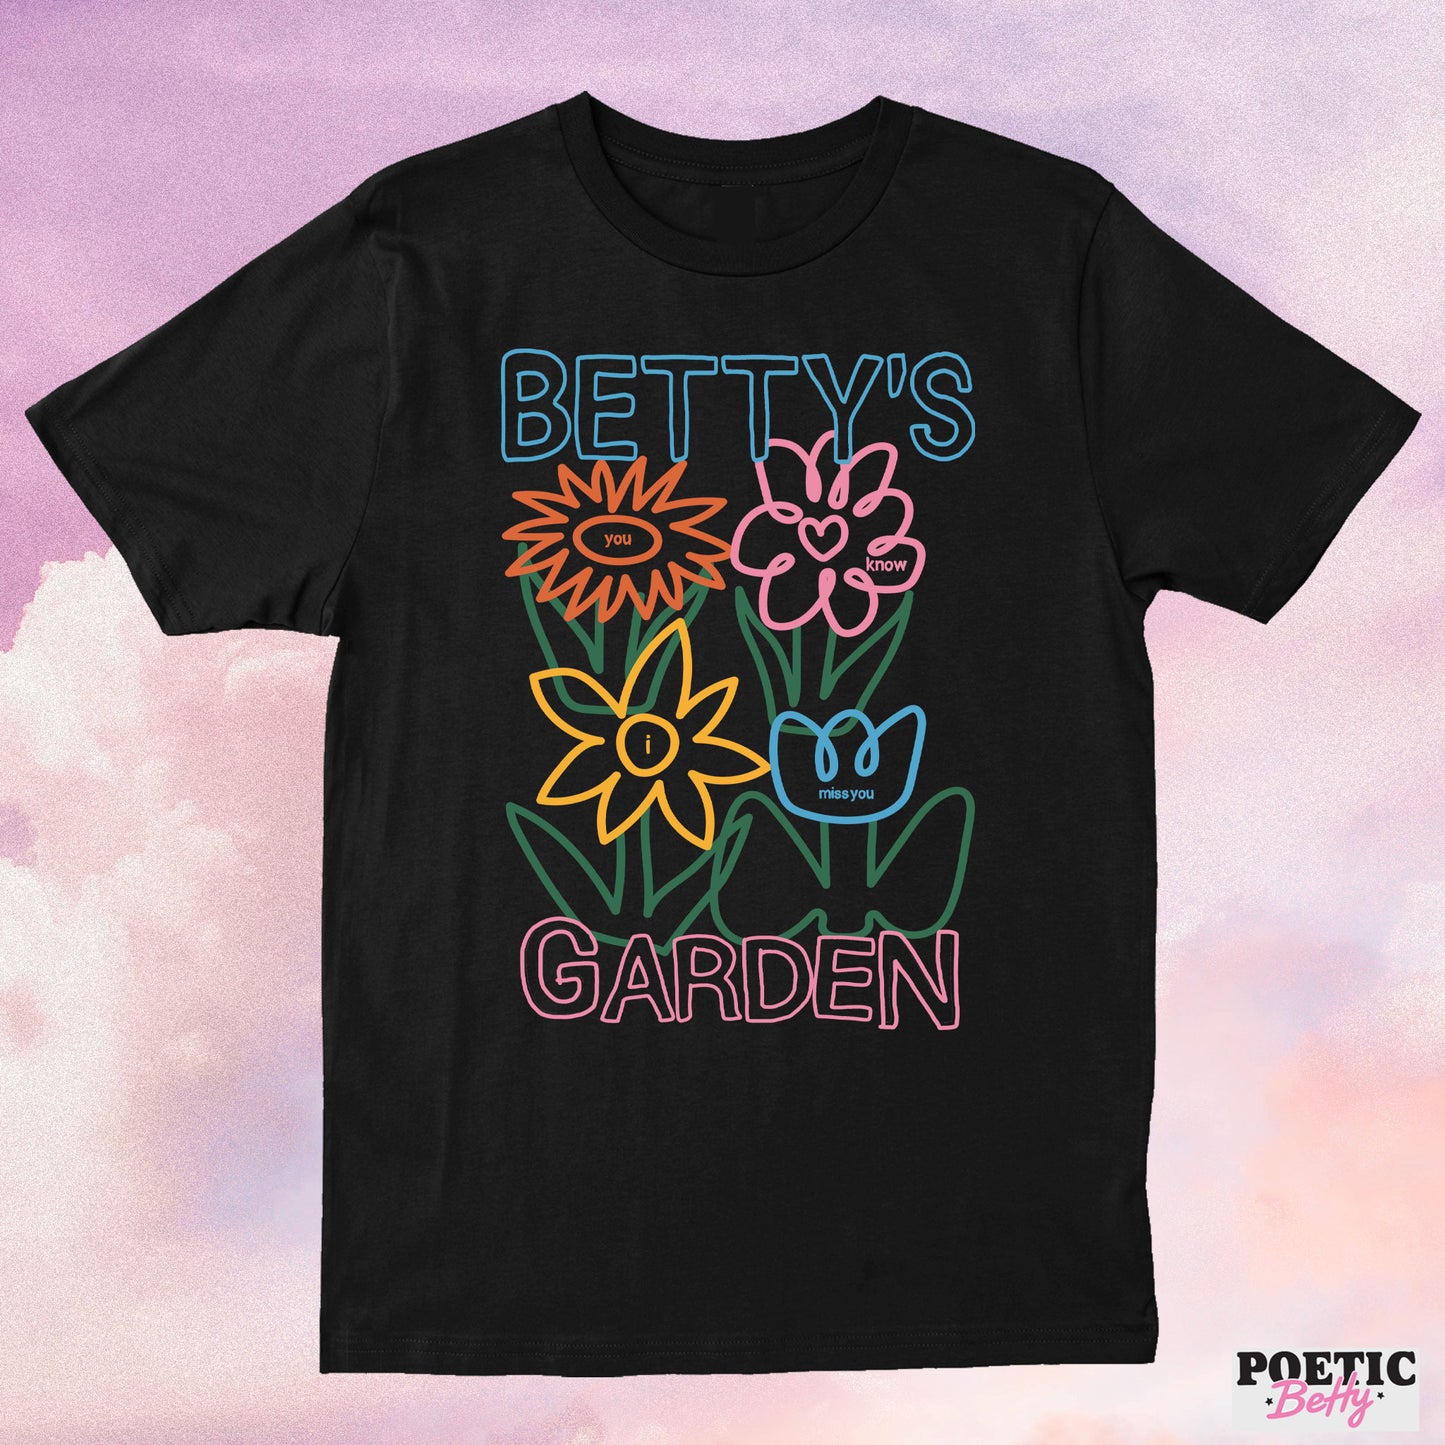 Betty's Folklore Garden Organic Cotton T-Shirt